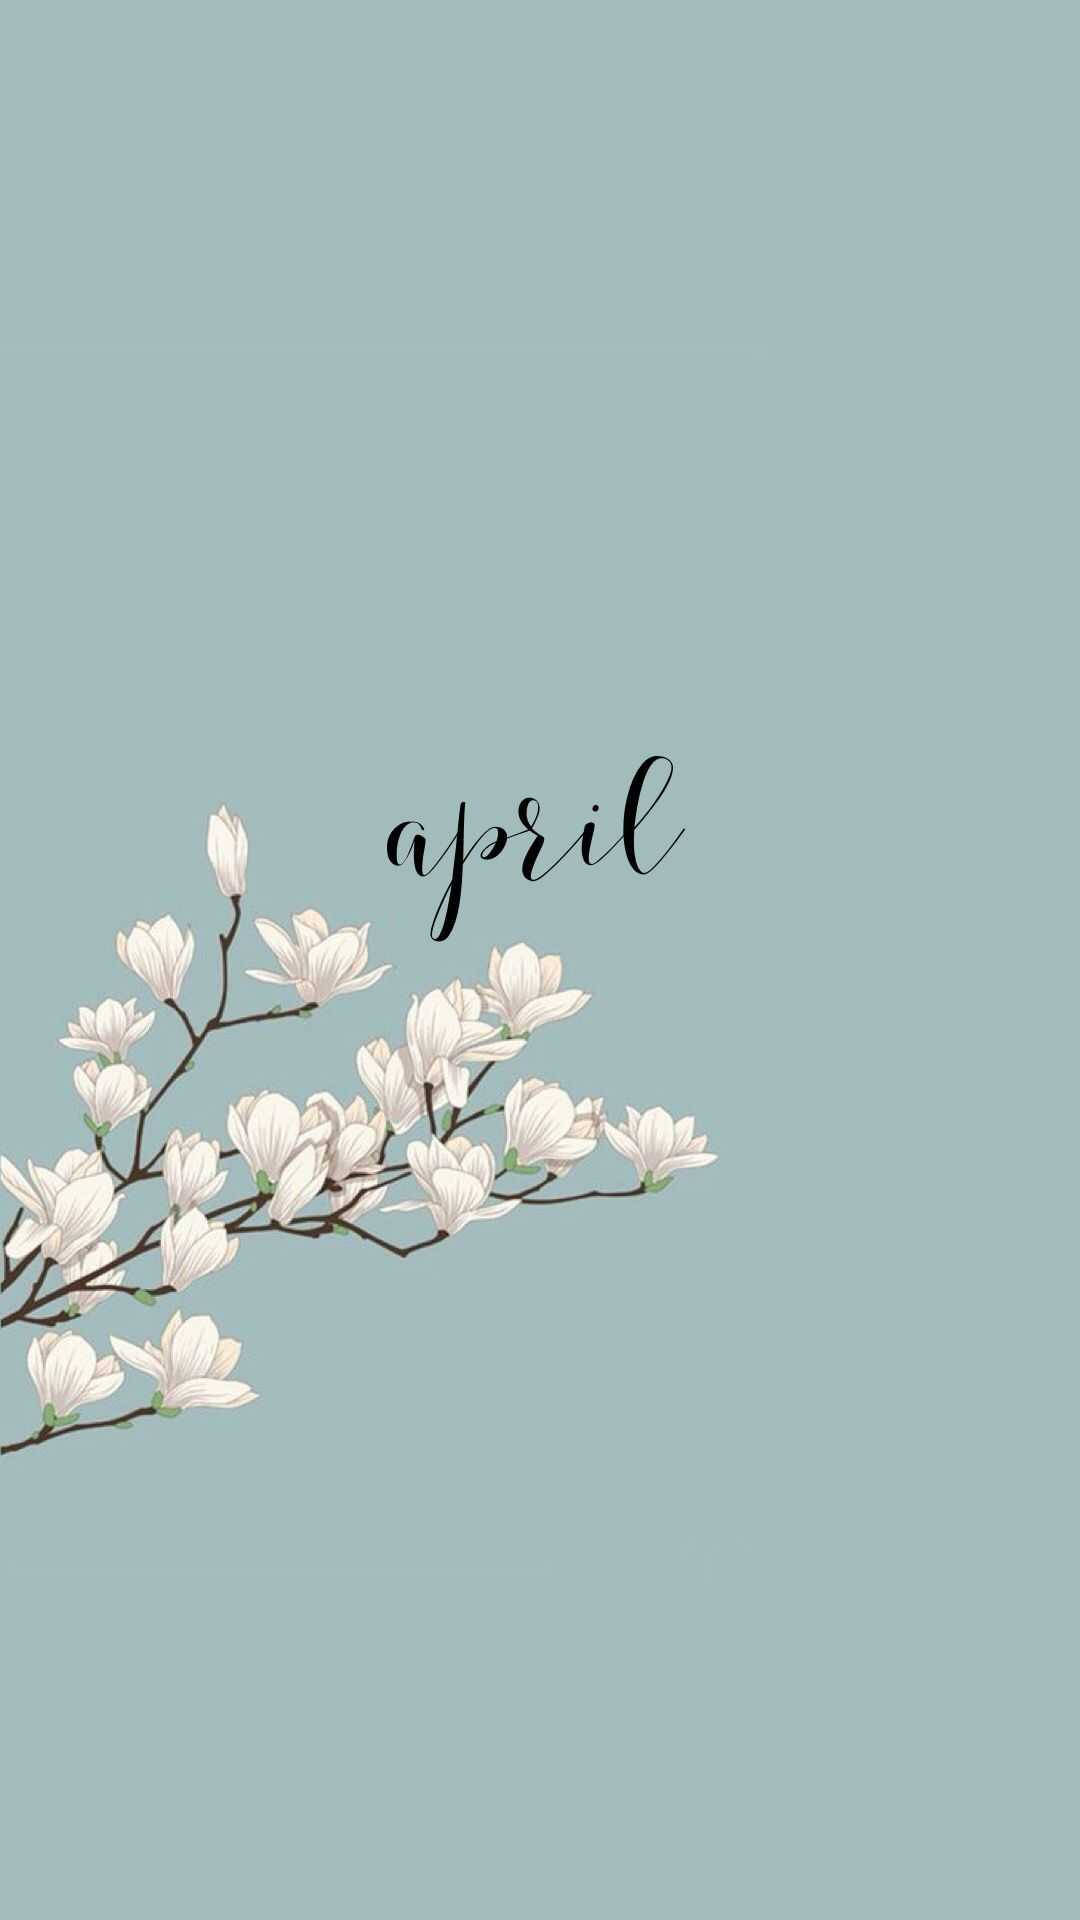 April Spring Aesthetic